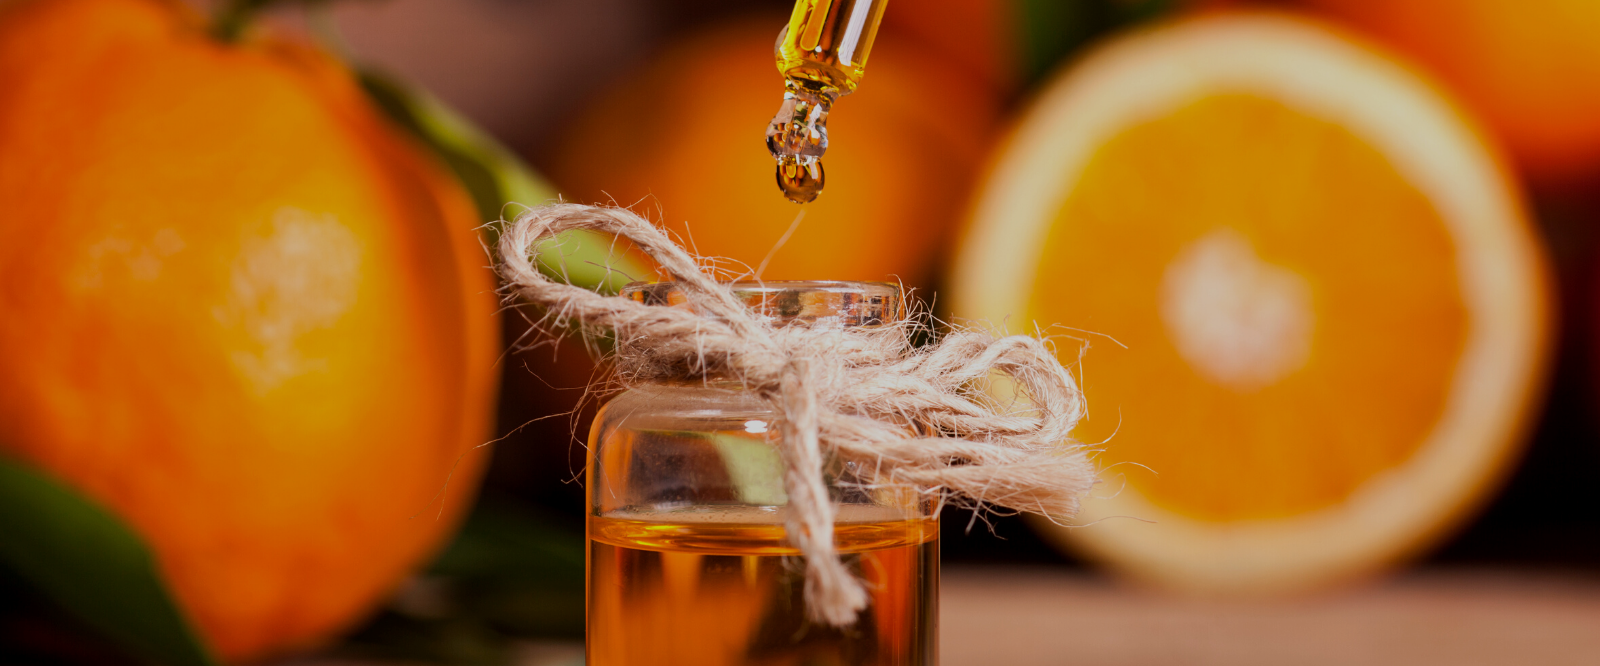 orange essential oil for us in holistic skin care